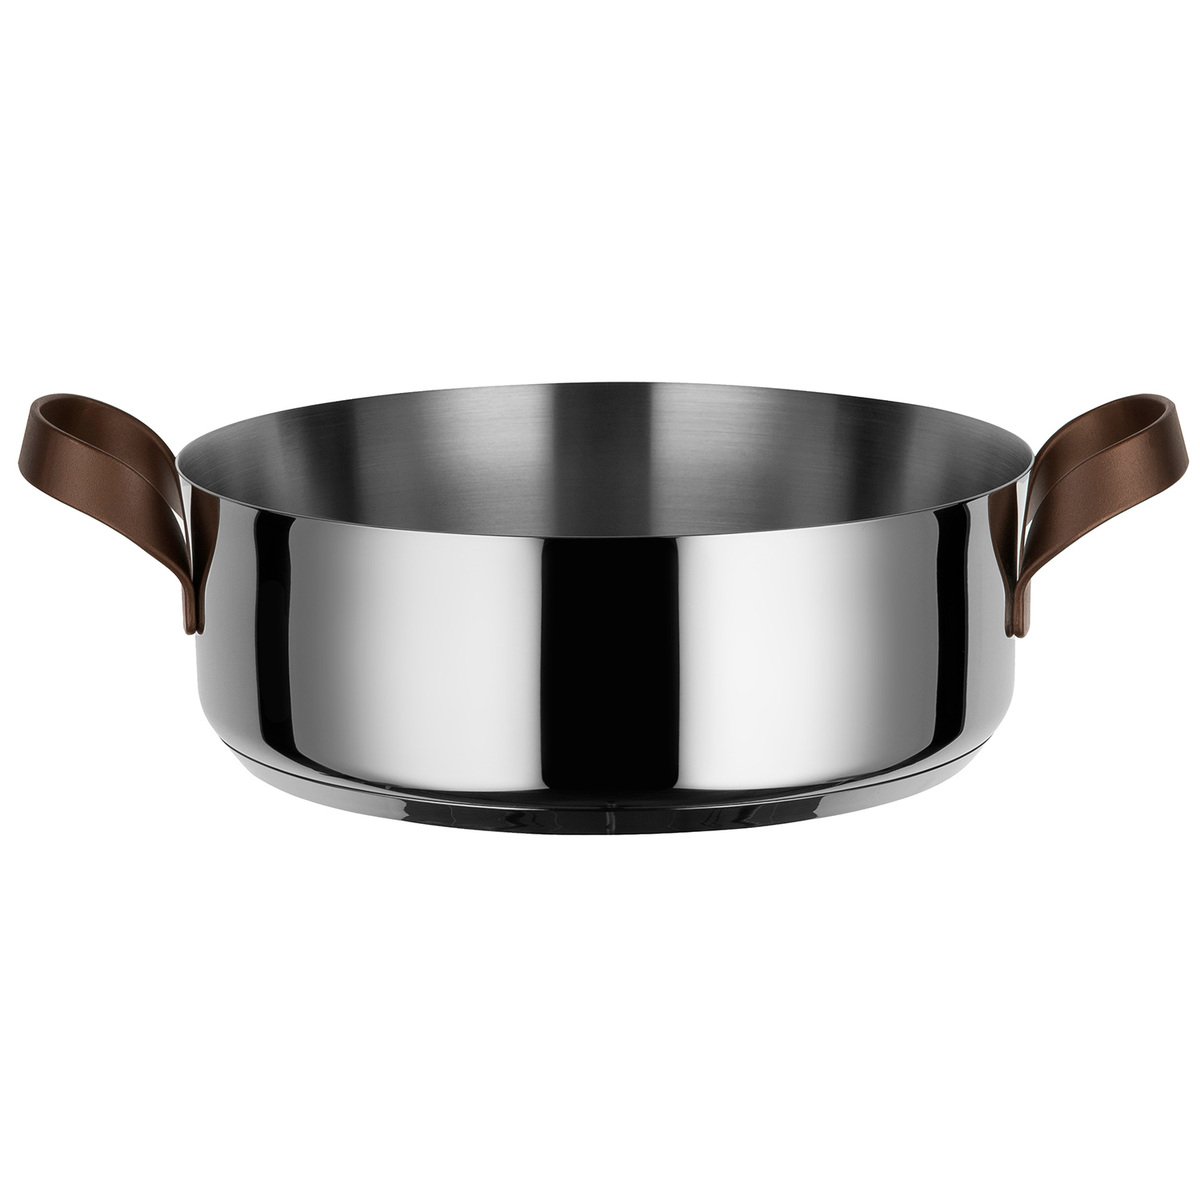 Alessi Edo low casserole with handles 28 cm, 5 L, Pre-used design